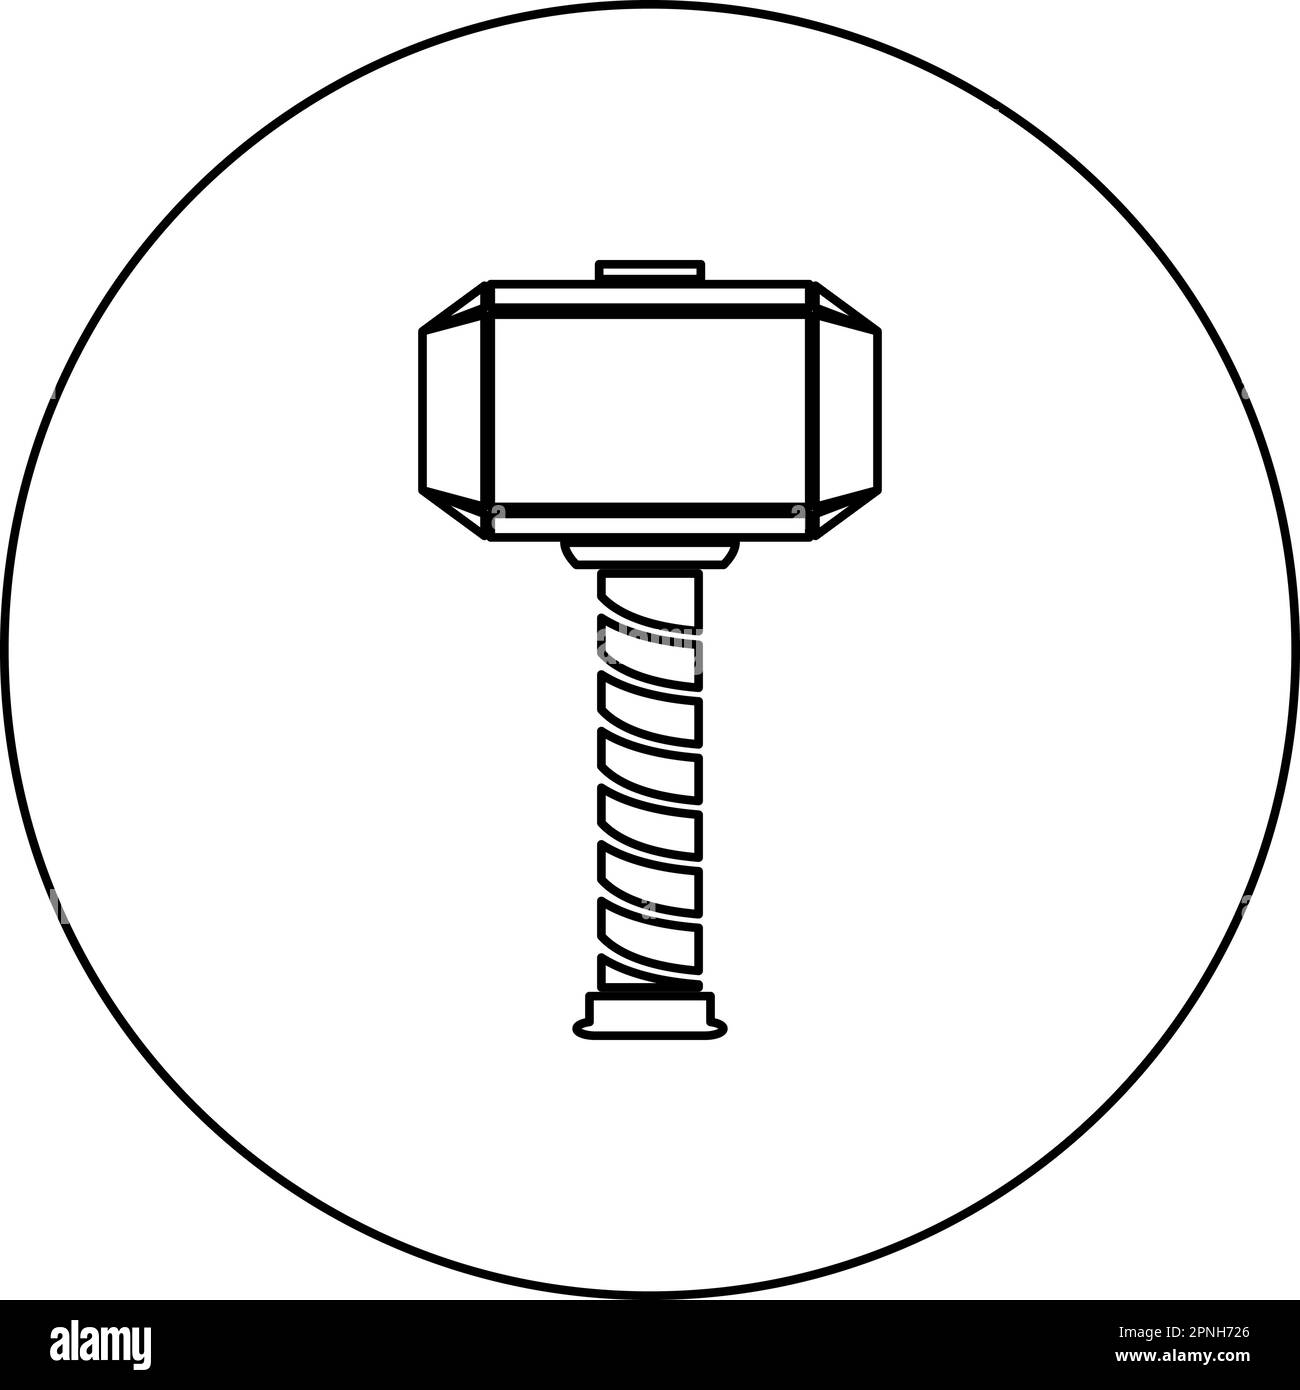 How To Draw Mjölnir Thor Hammer | Easy Drawing Ideas - YouTube